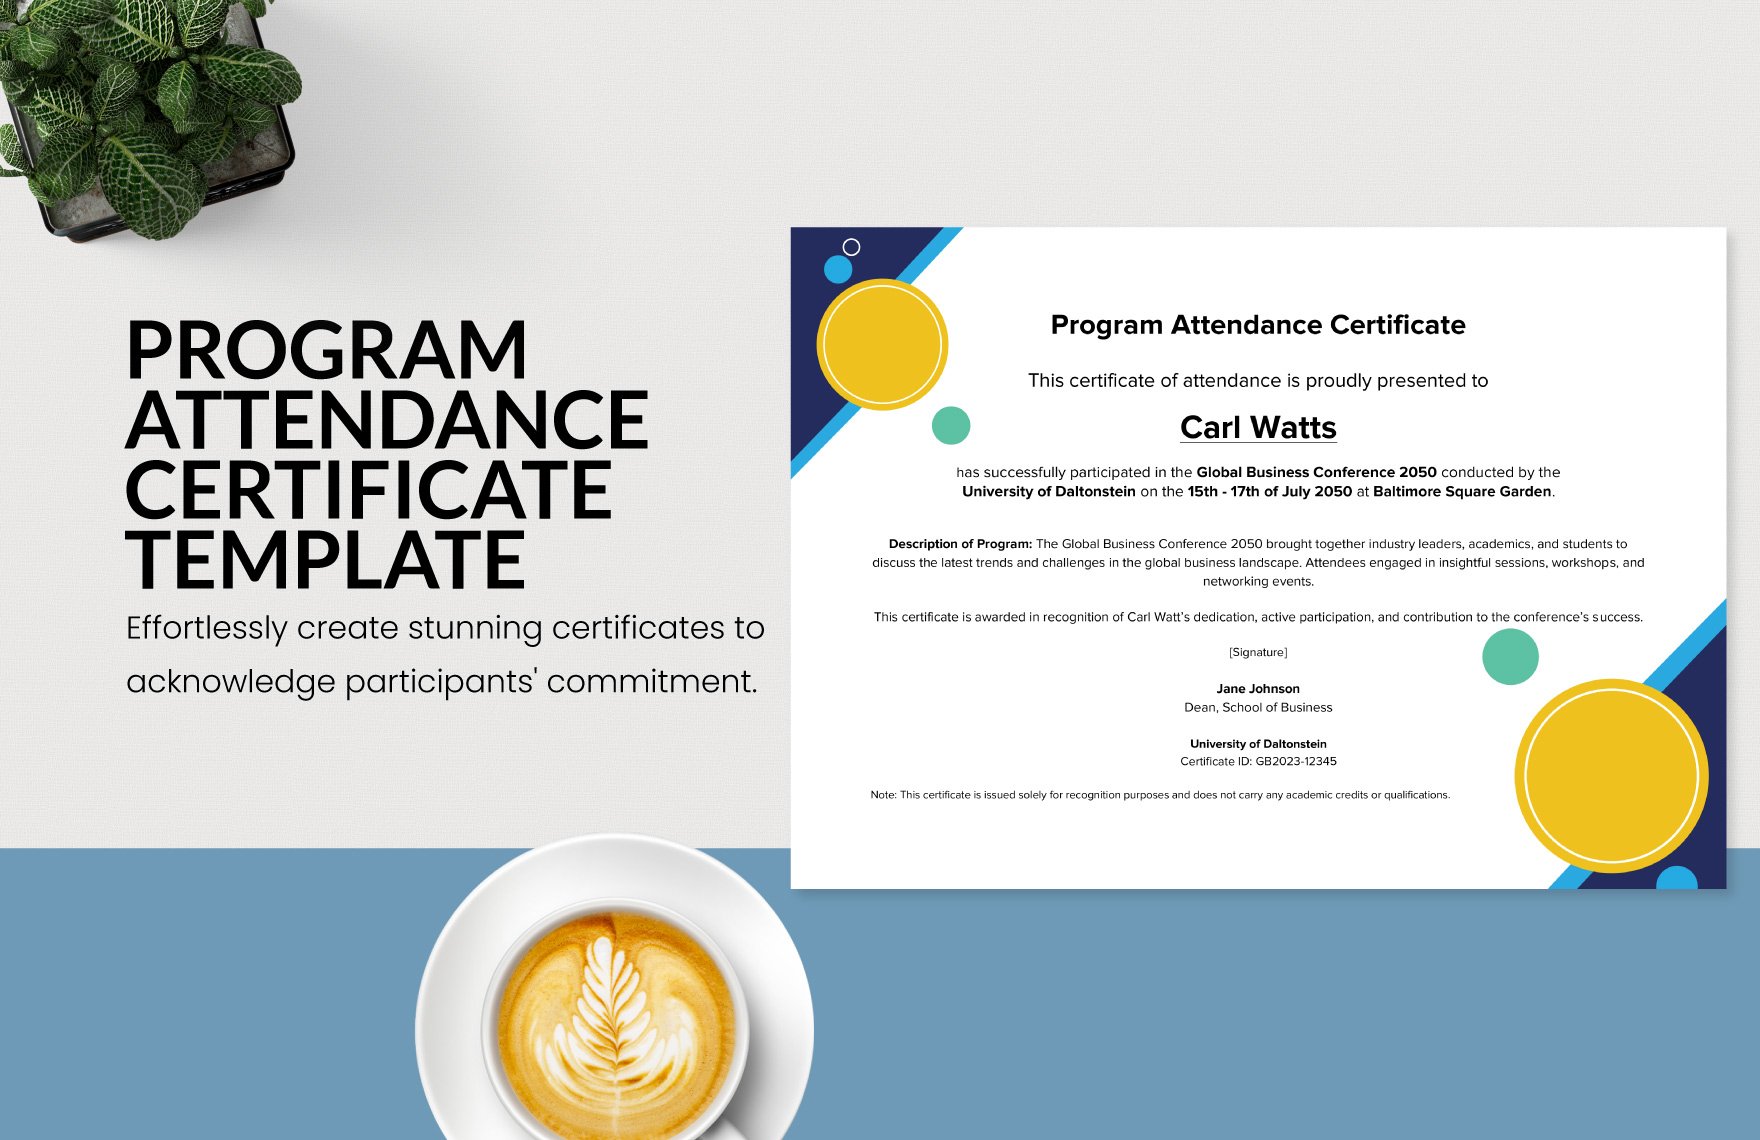 Program Attendance Certificate Template